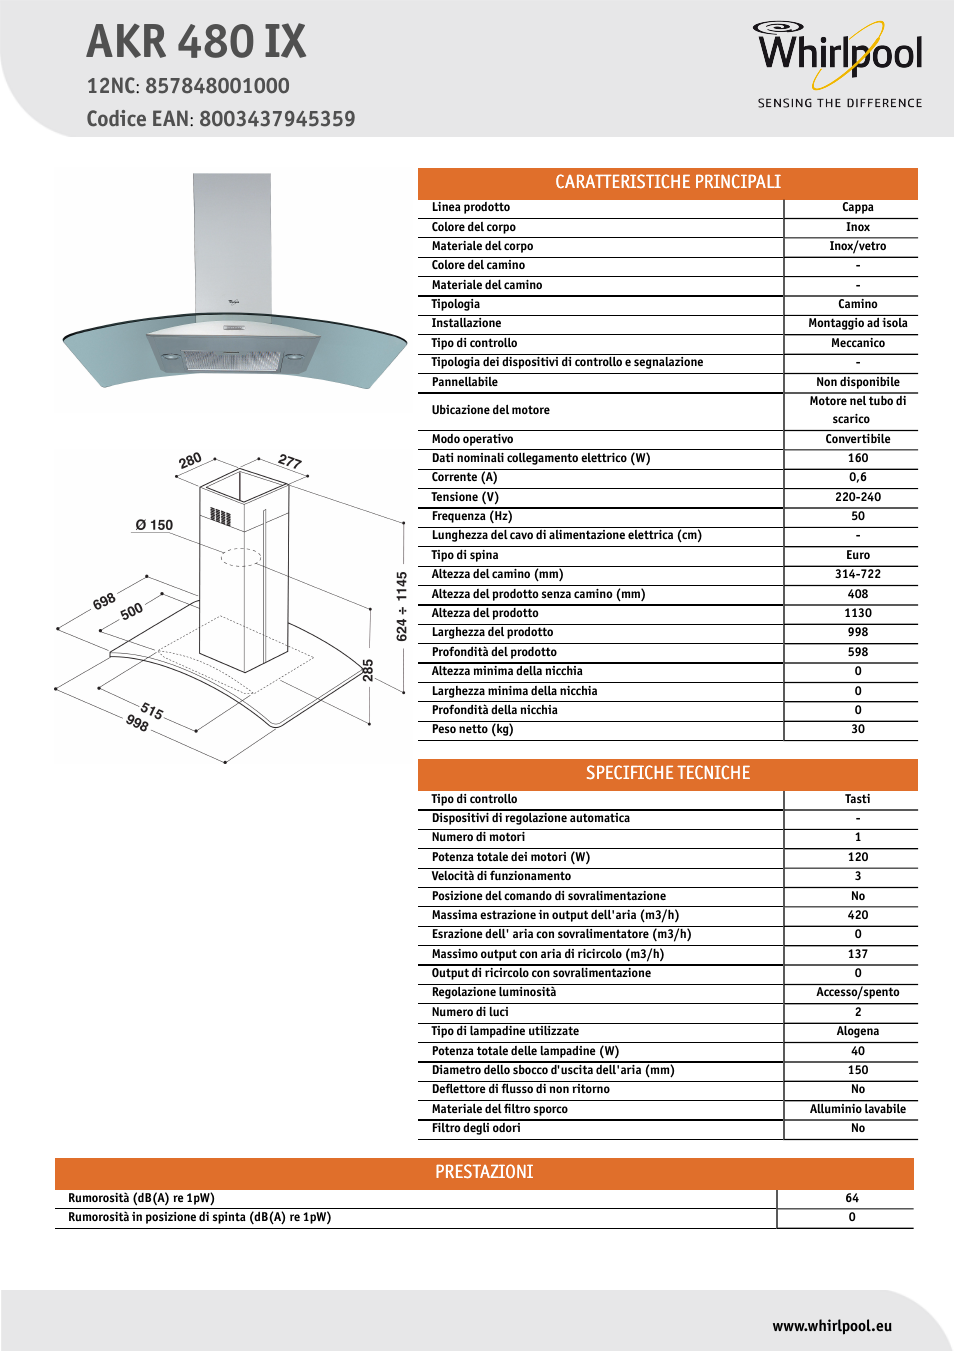 Whirlpool AKR 480 IX Manuale d'uso | Pagine: 1